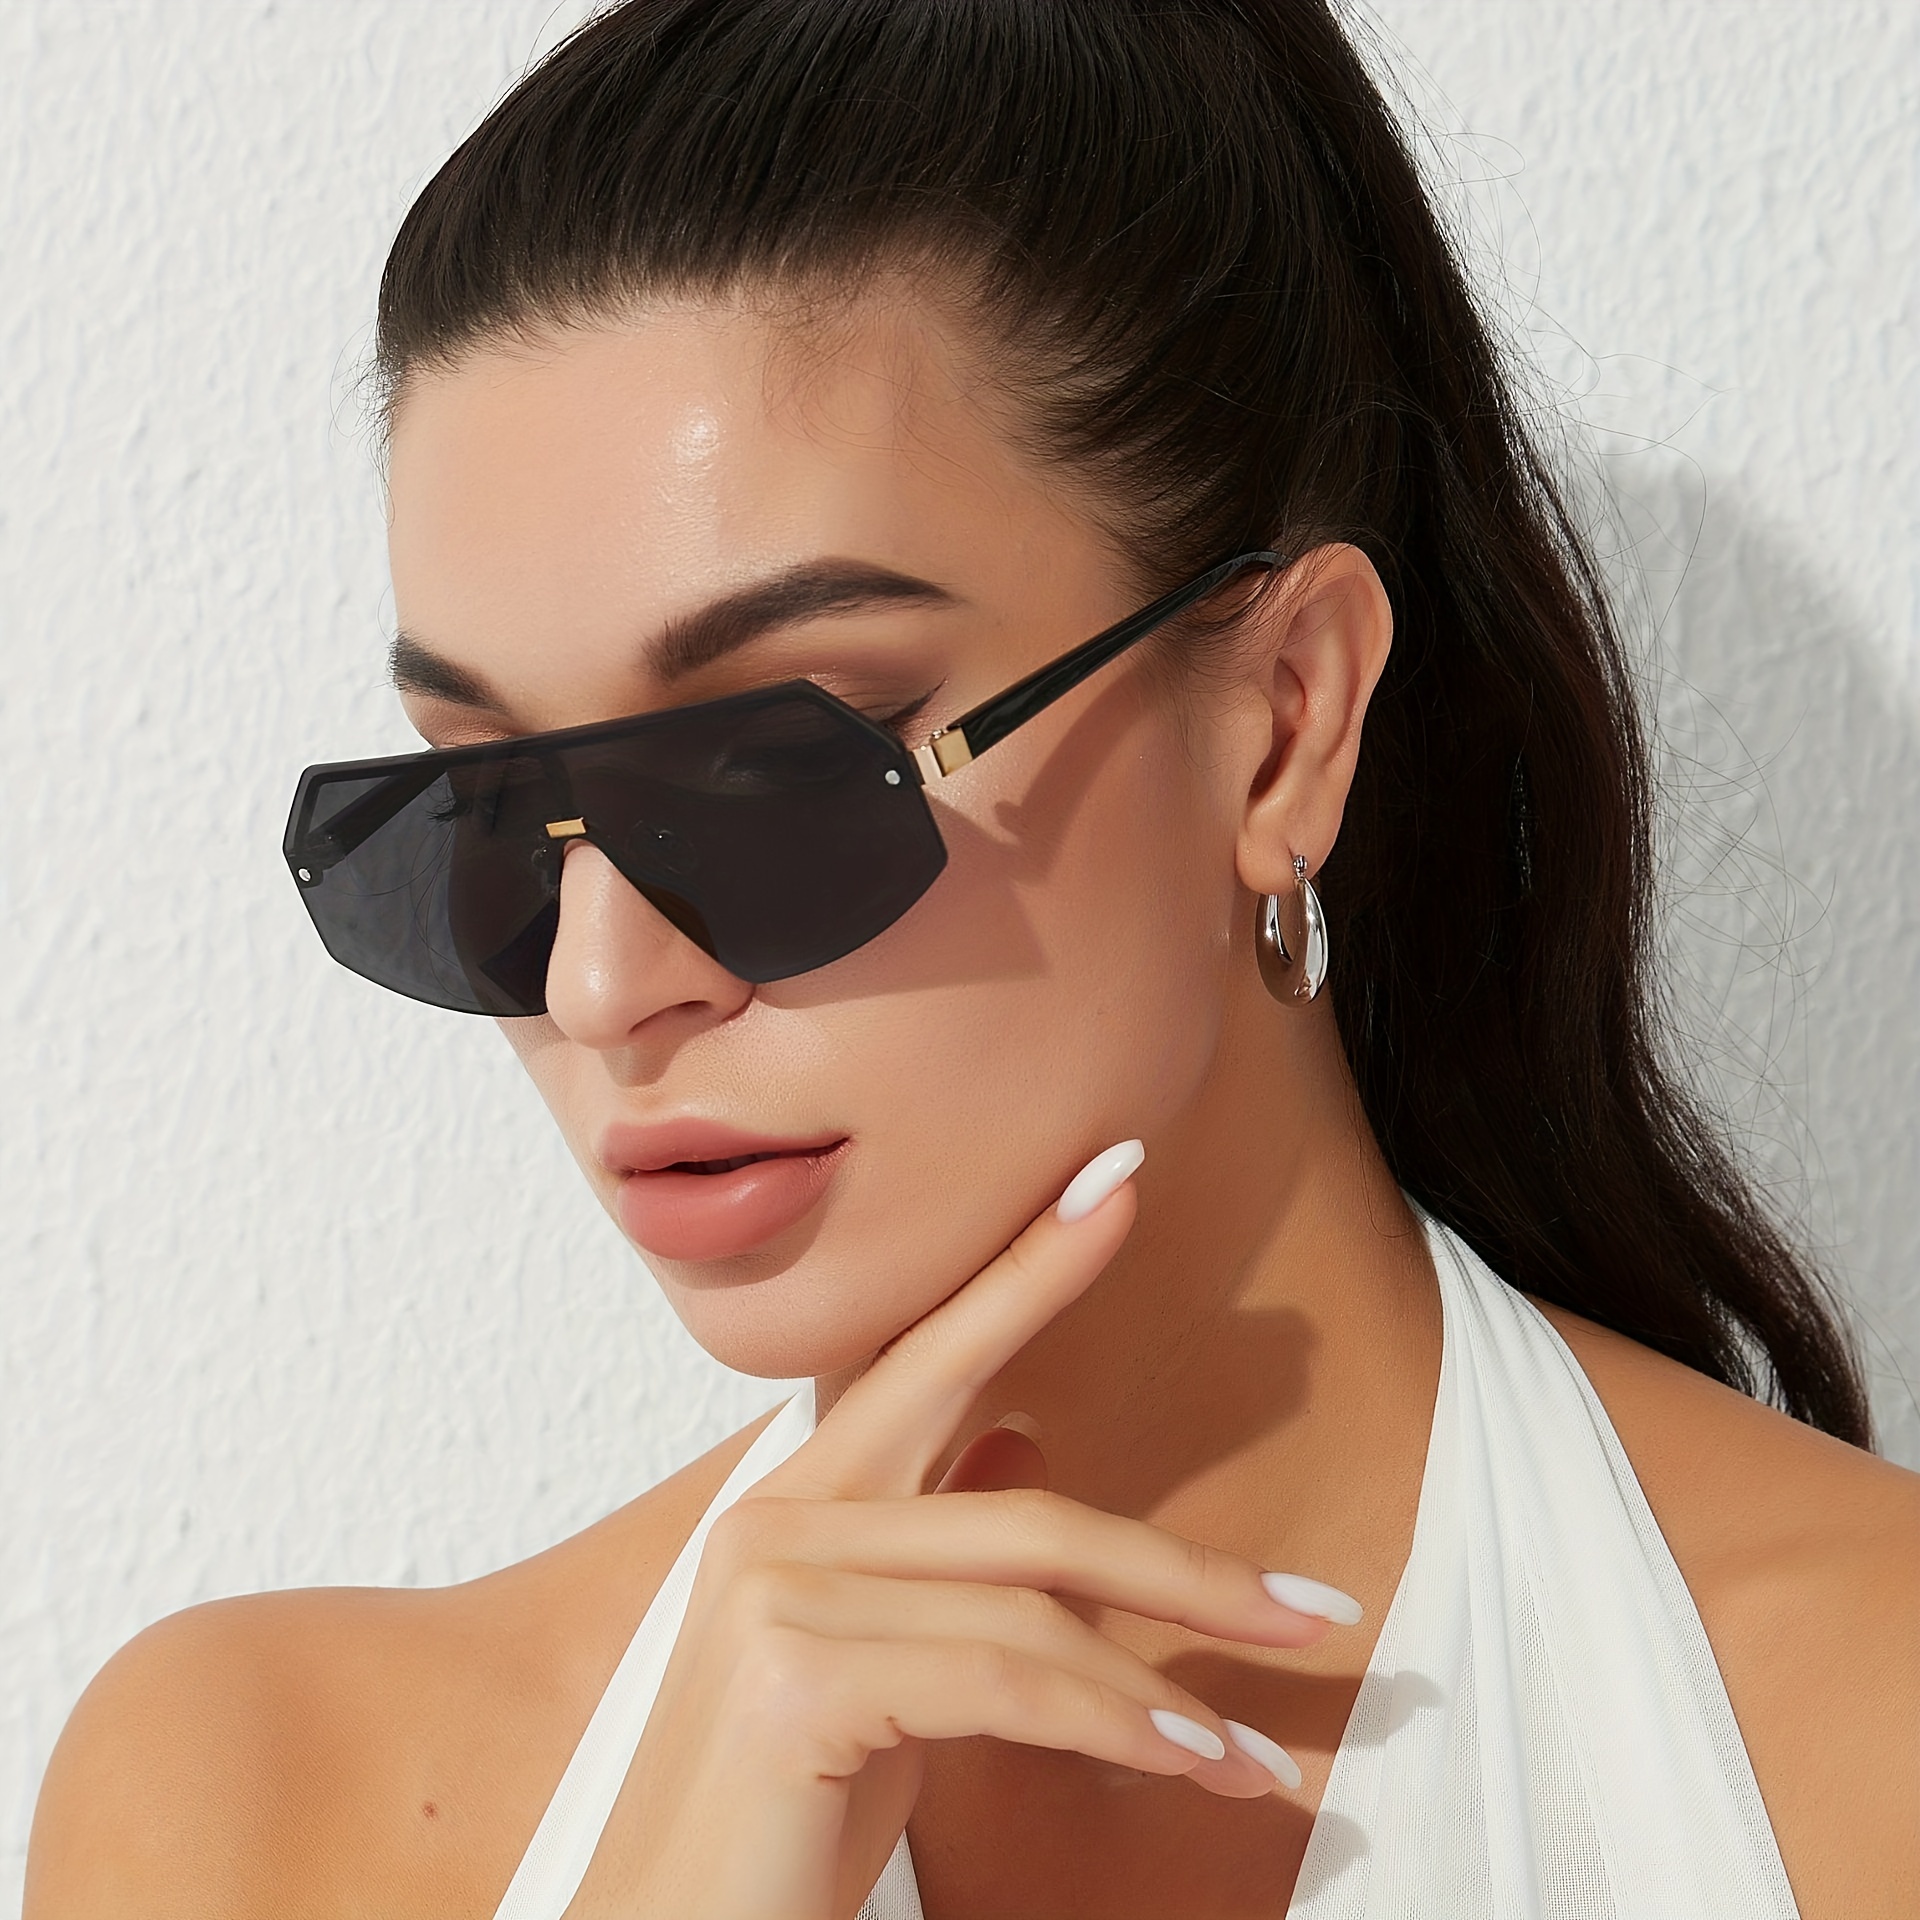 Designer Oversized One Piece Square Sunglasses